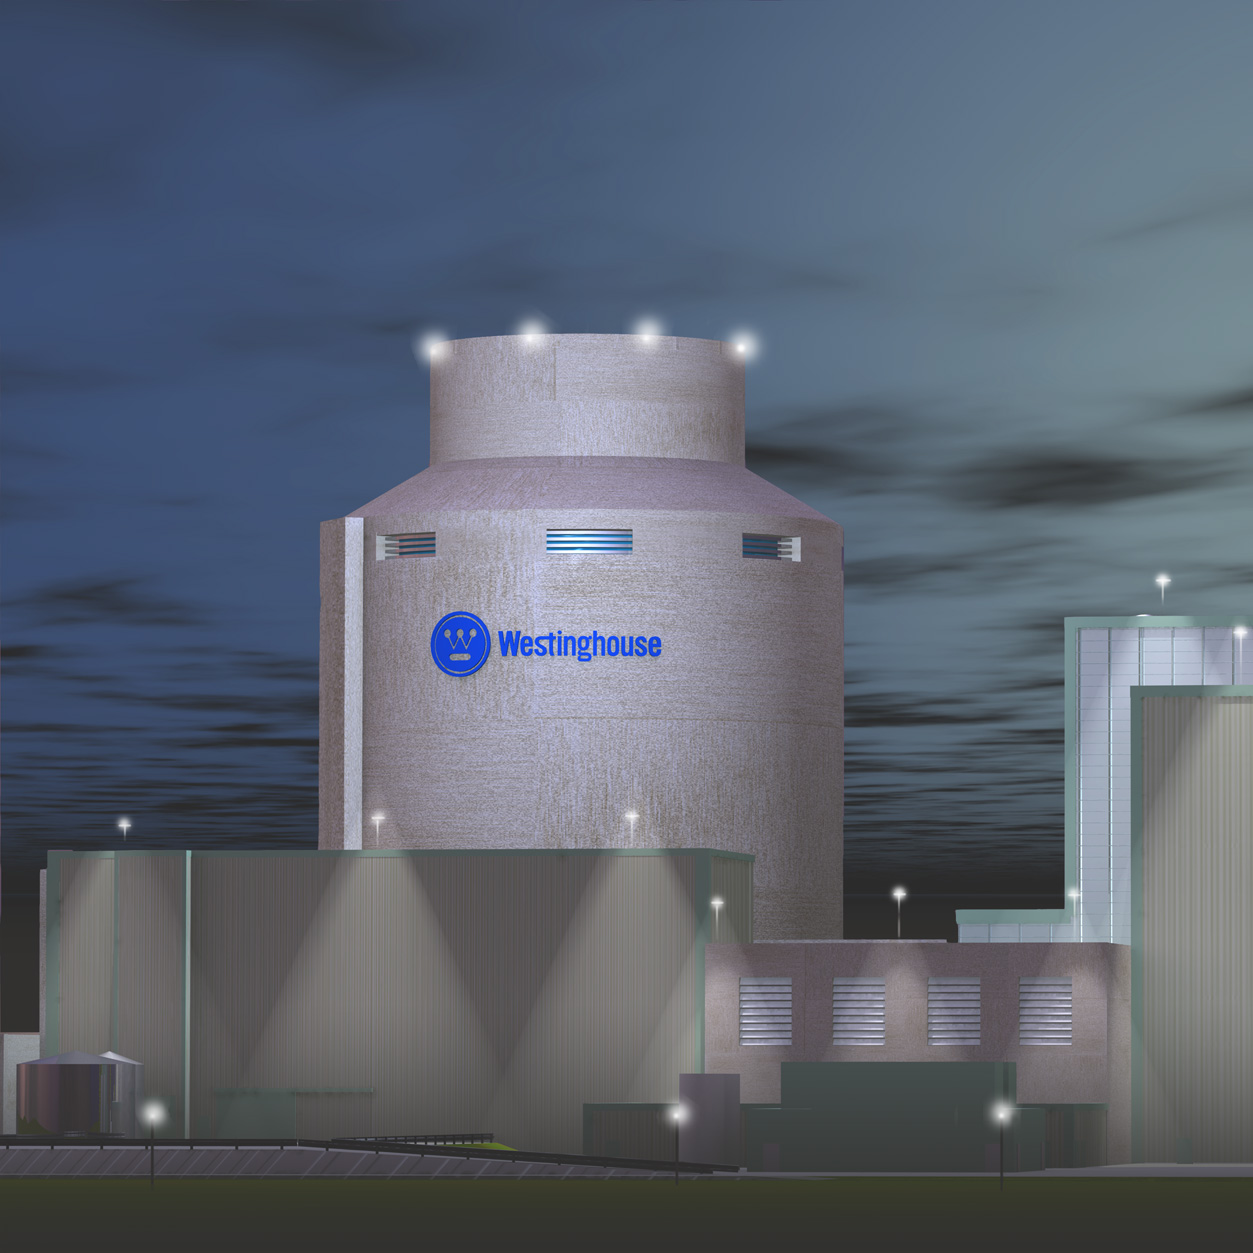 Westinghouse AP1000 Reactor - Simulated Night Scene
Keywords: Westinghouse AP1000 Reactor